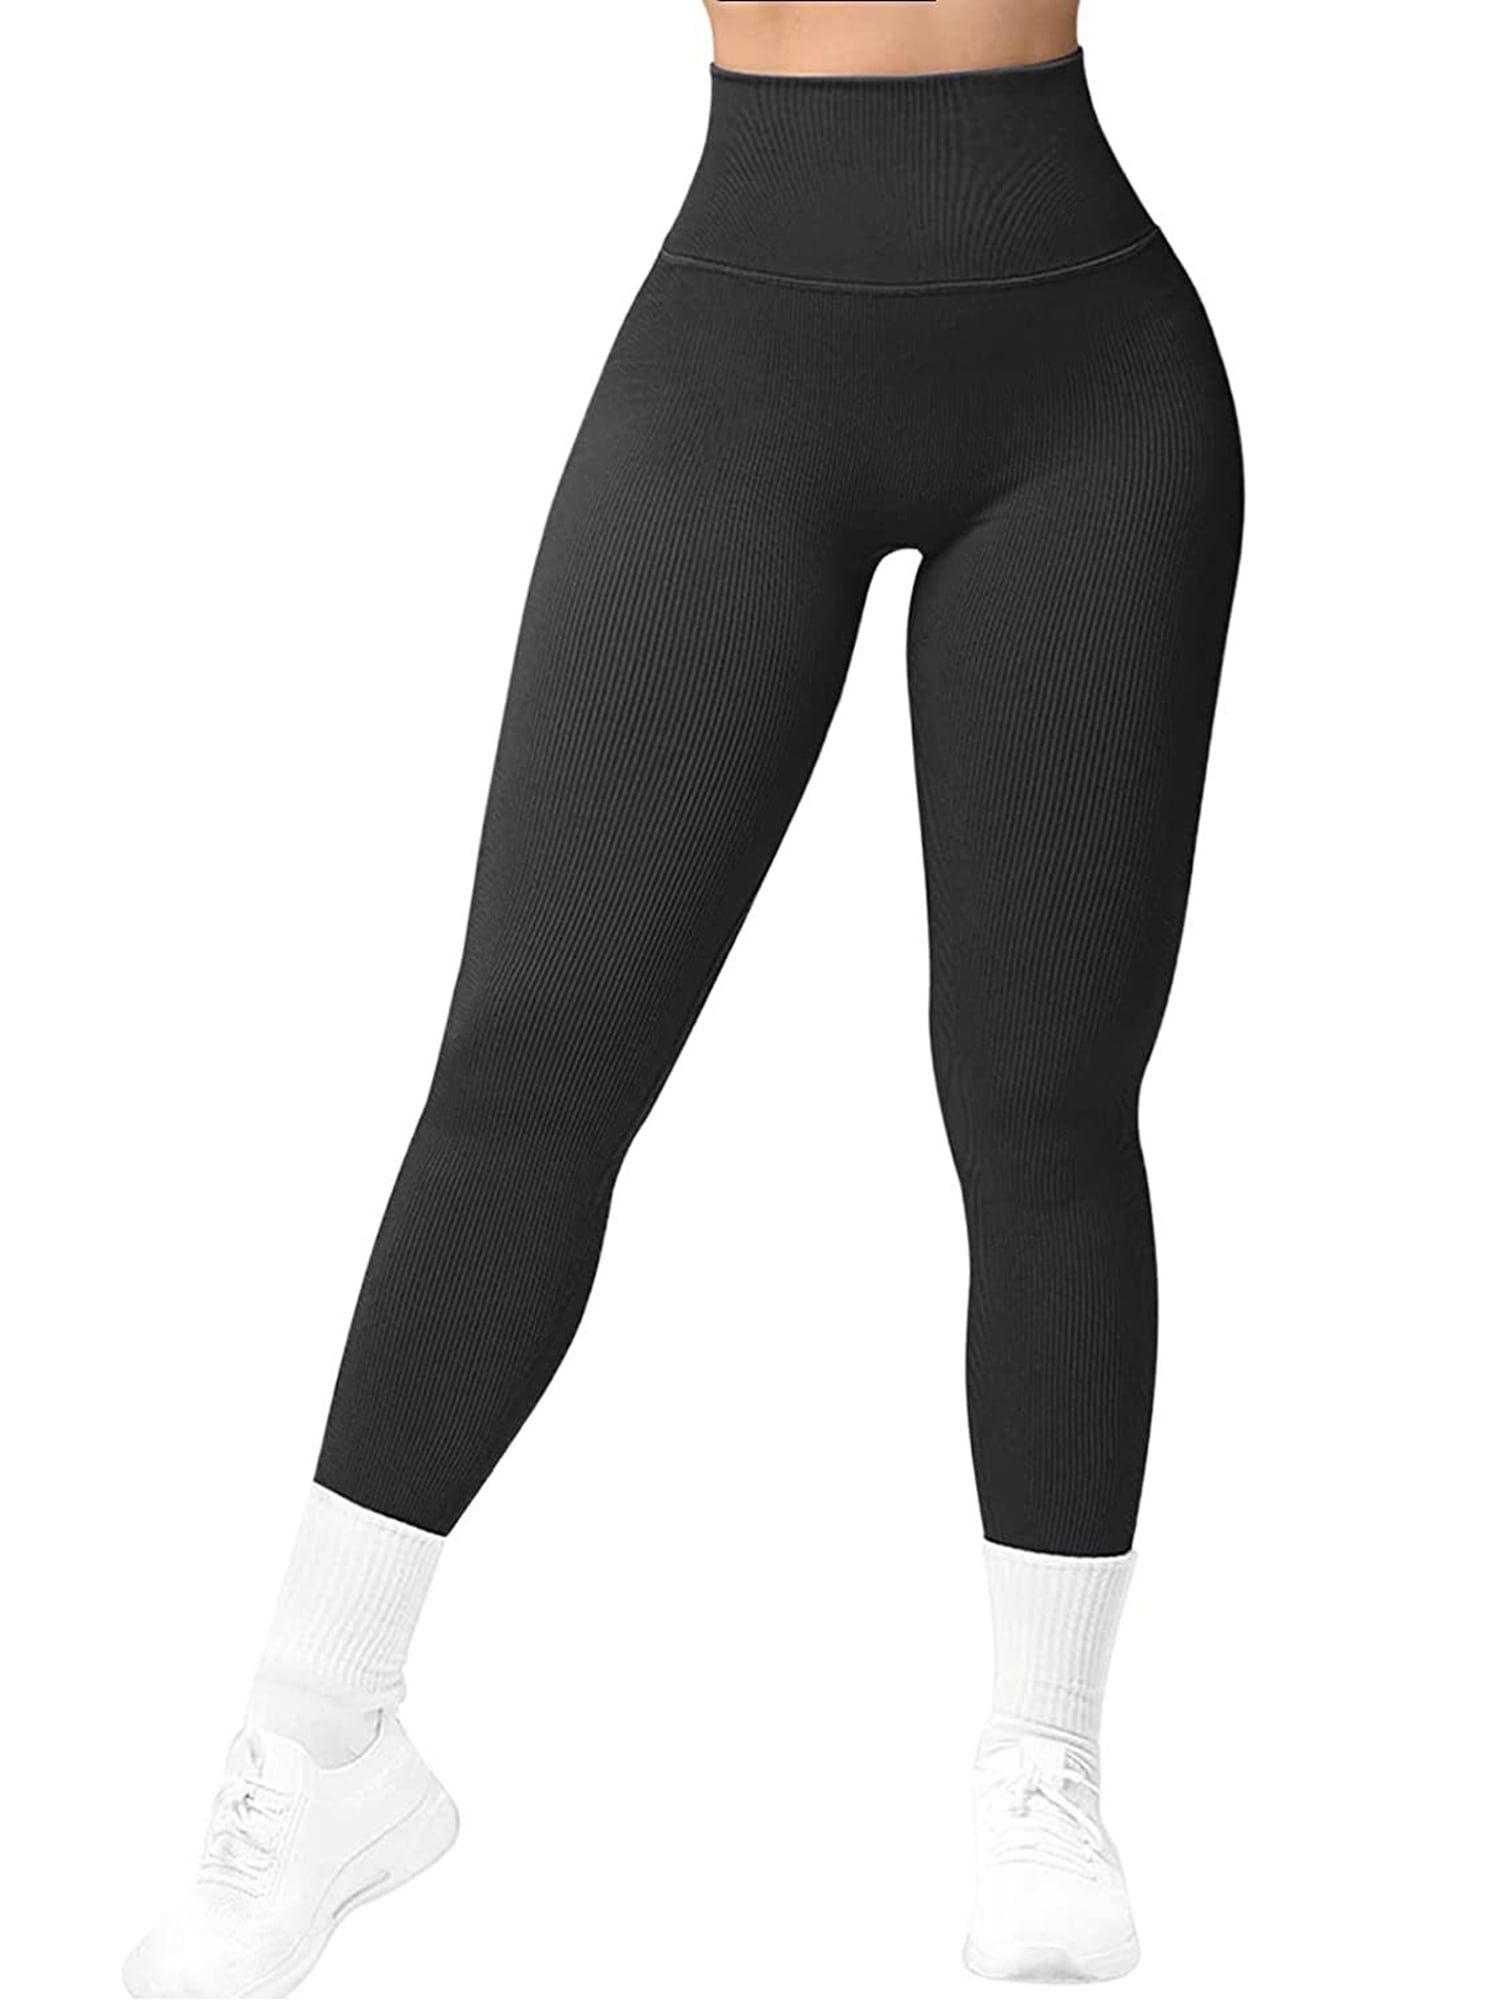 Beyond Yoga RBX Women's Athletic Leggings White Gray Black Size S